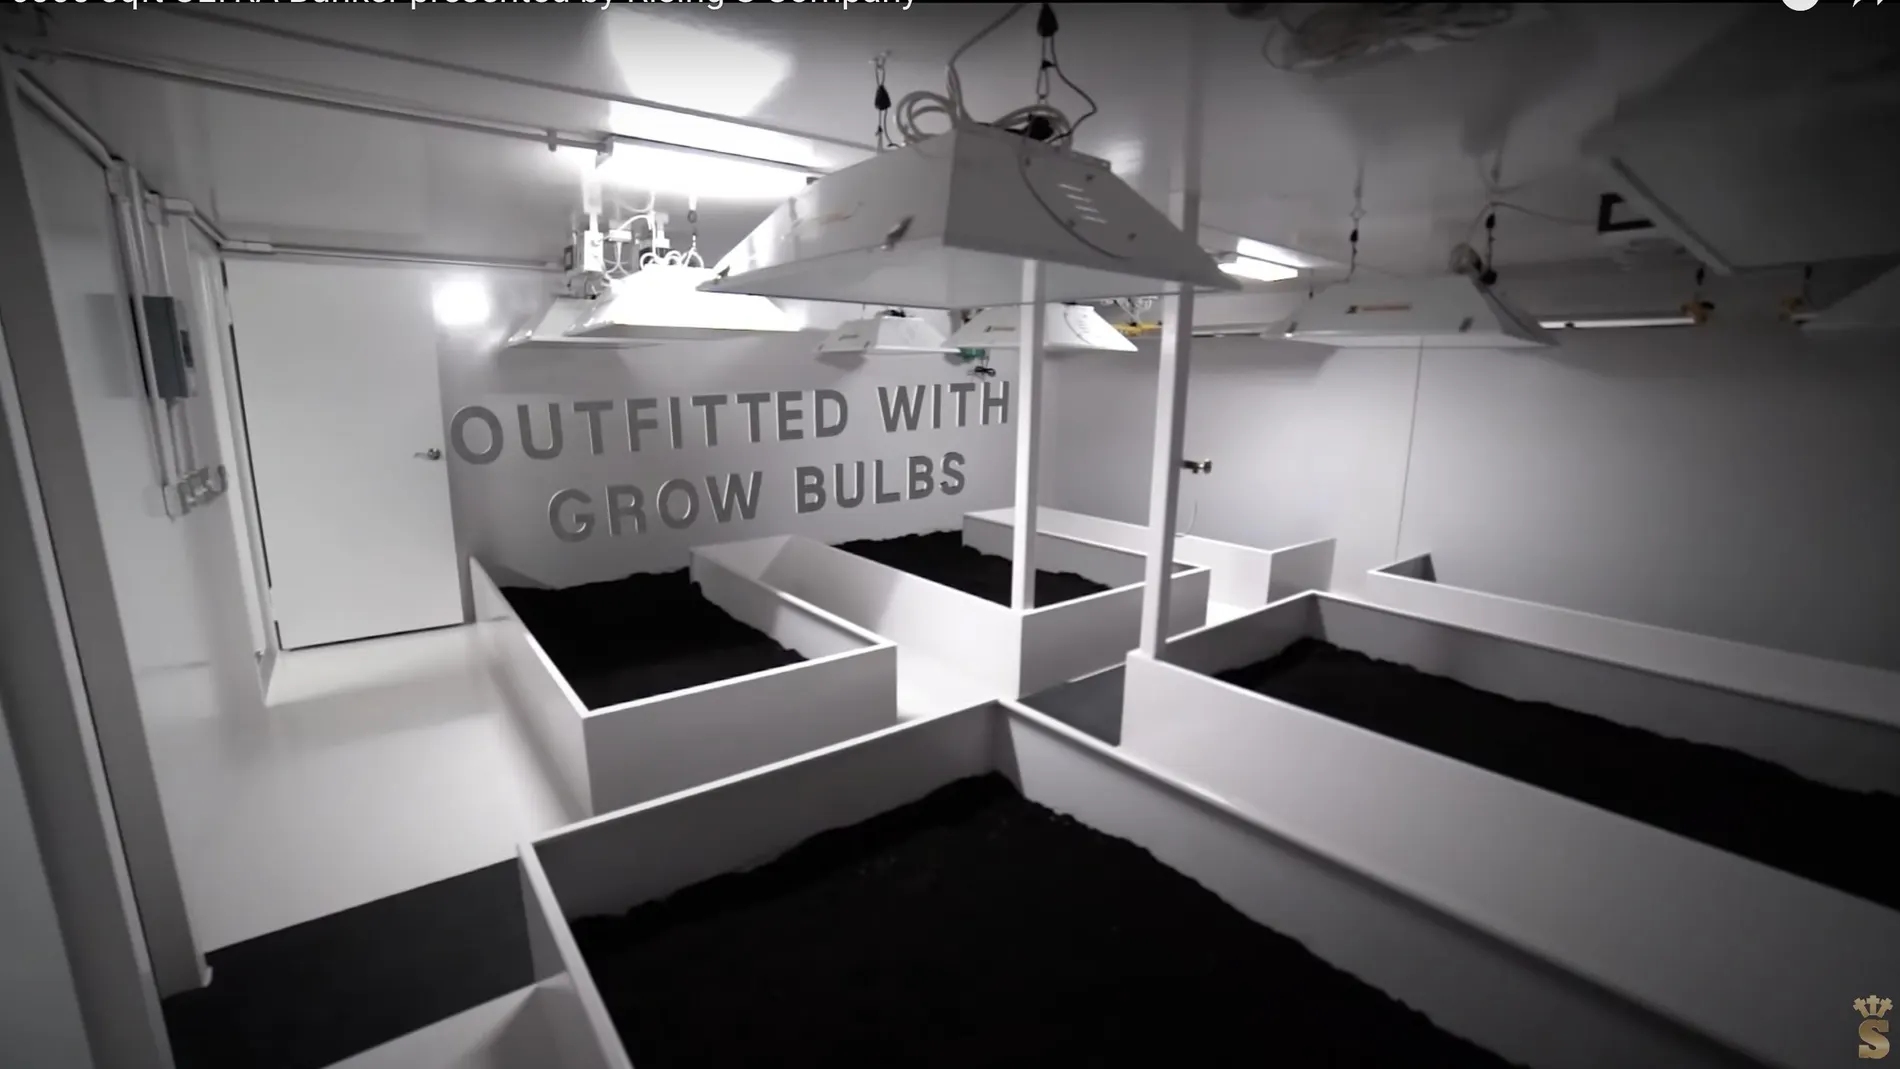 El bunker '6000 sqft Ultra' que comercializa una empresa de Texas va equipado con un invernadero